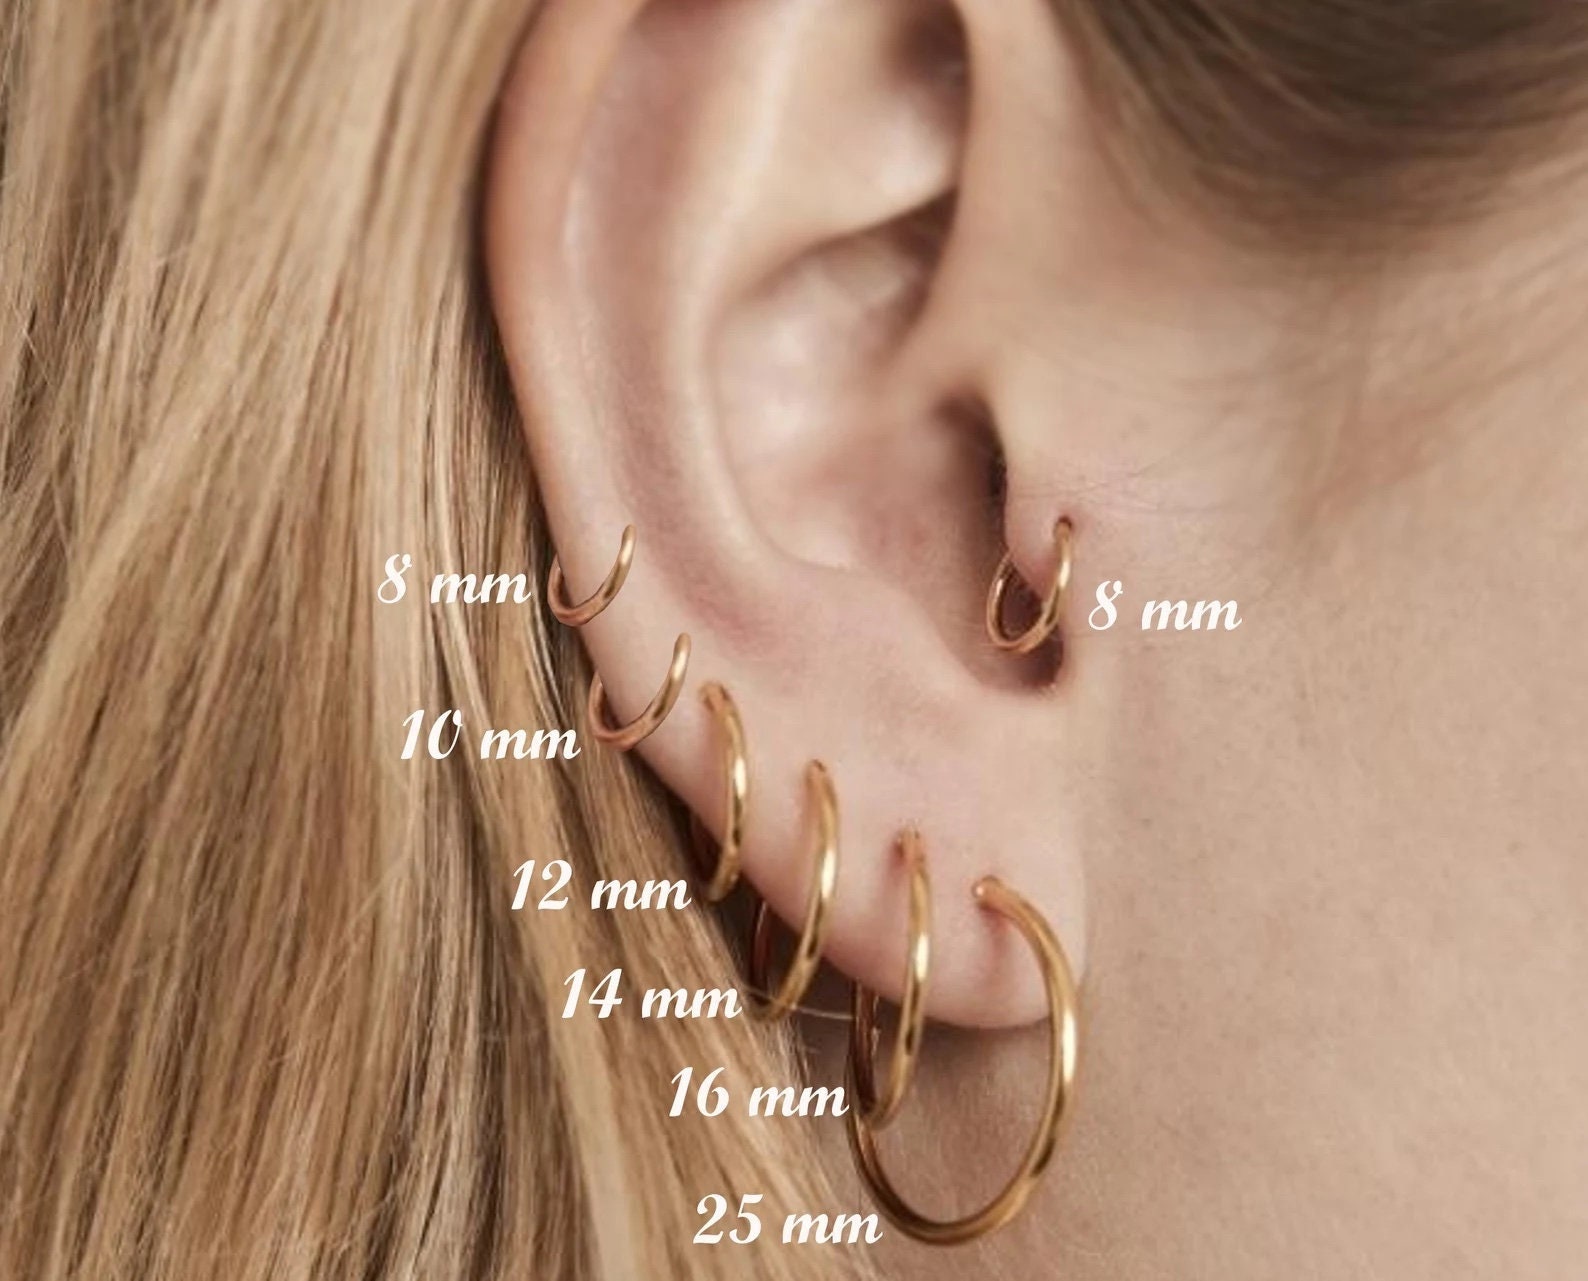 Diamond Stud Earring Size Chart with Actual Photos on Ear  Ryan Hart